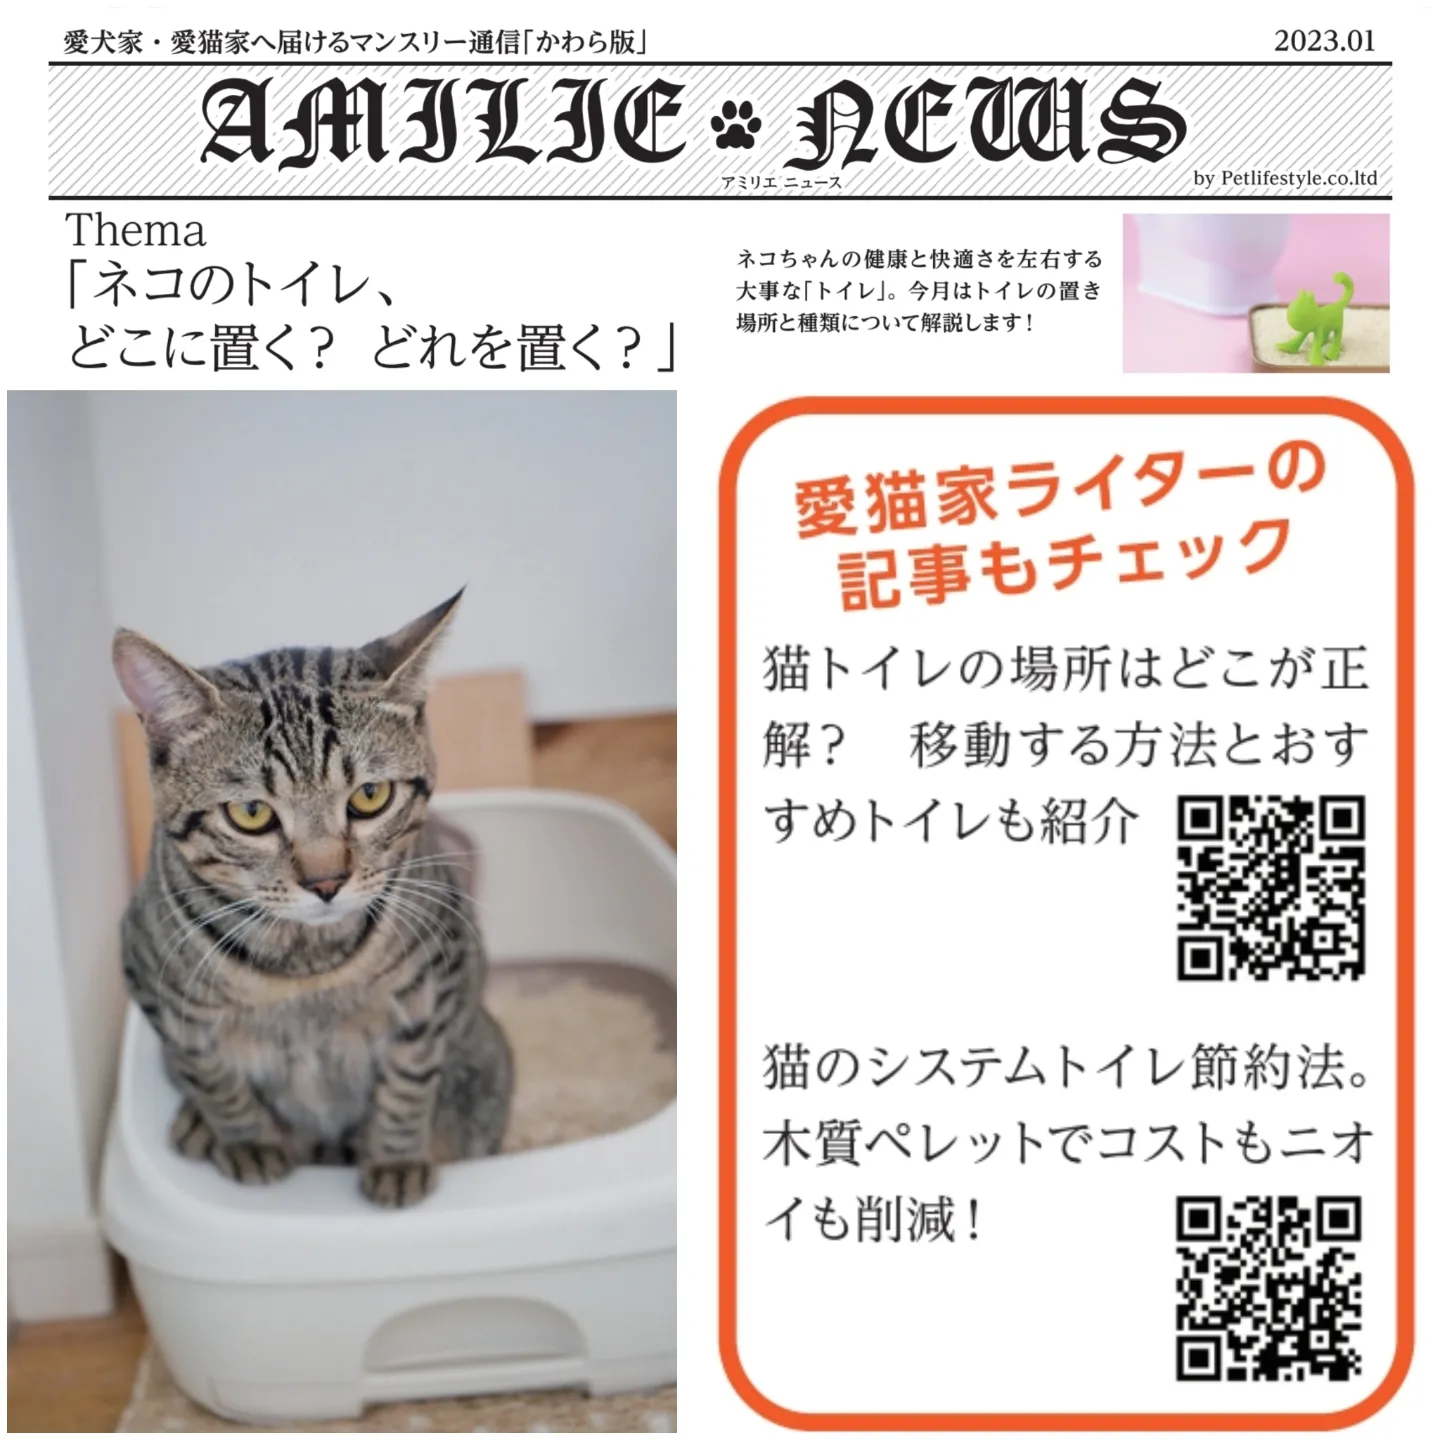 【AMILIE】ネコのトイレ